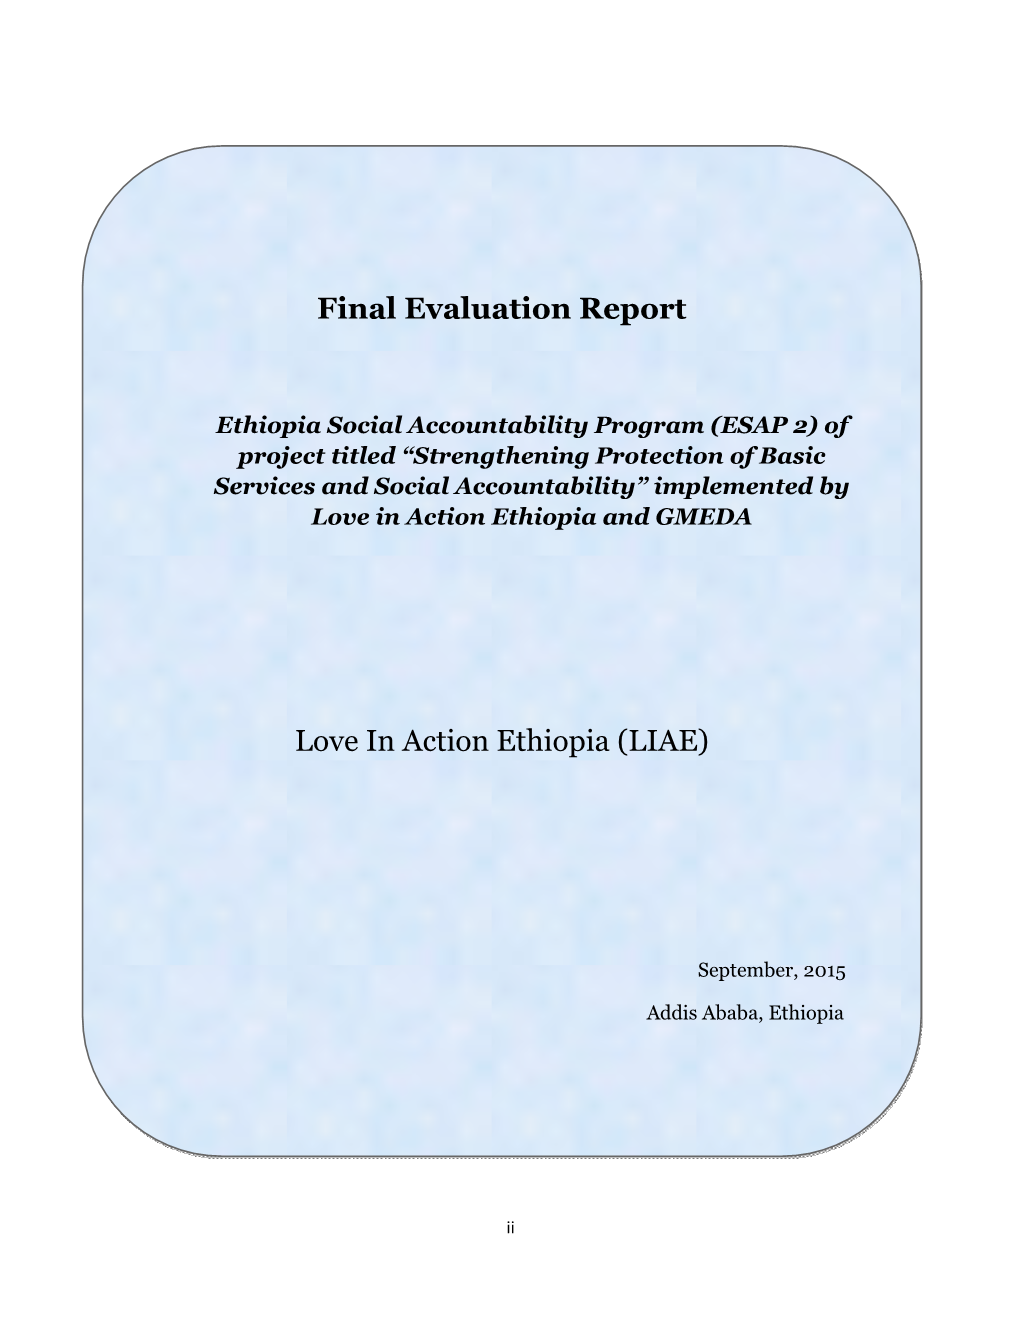 Final Evaluation Report Love in Action Ethiopia (LIAE)